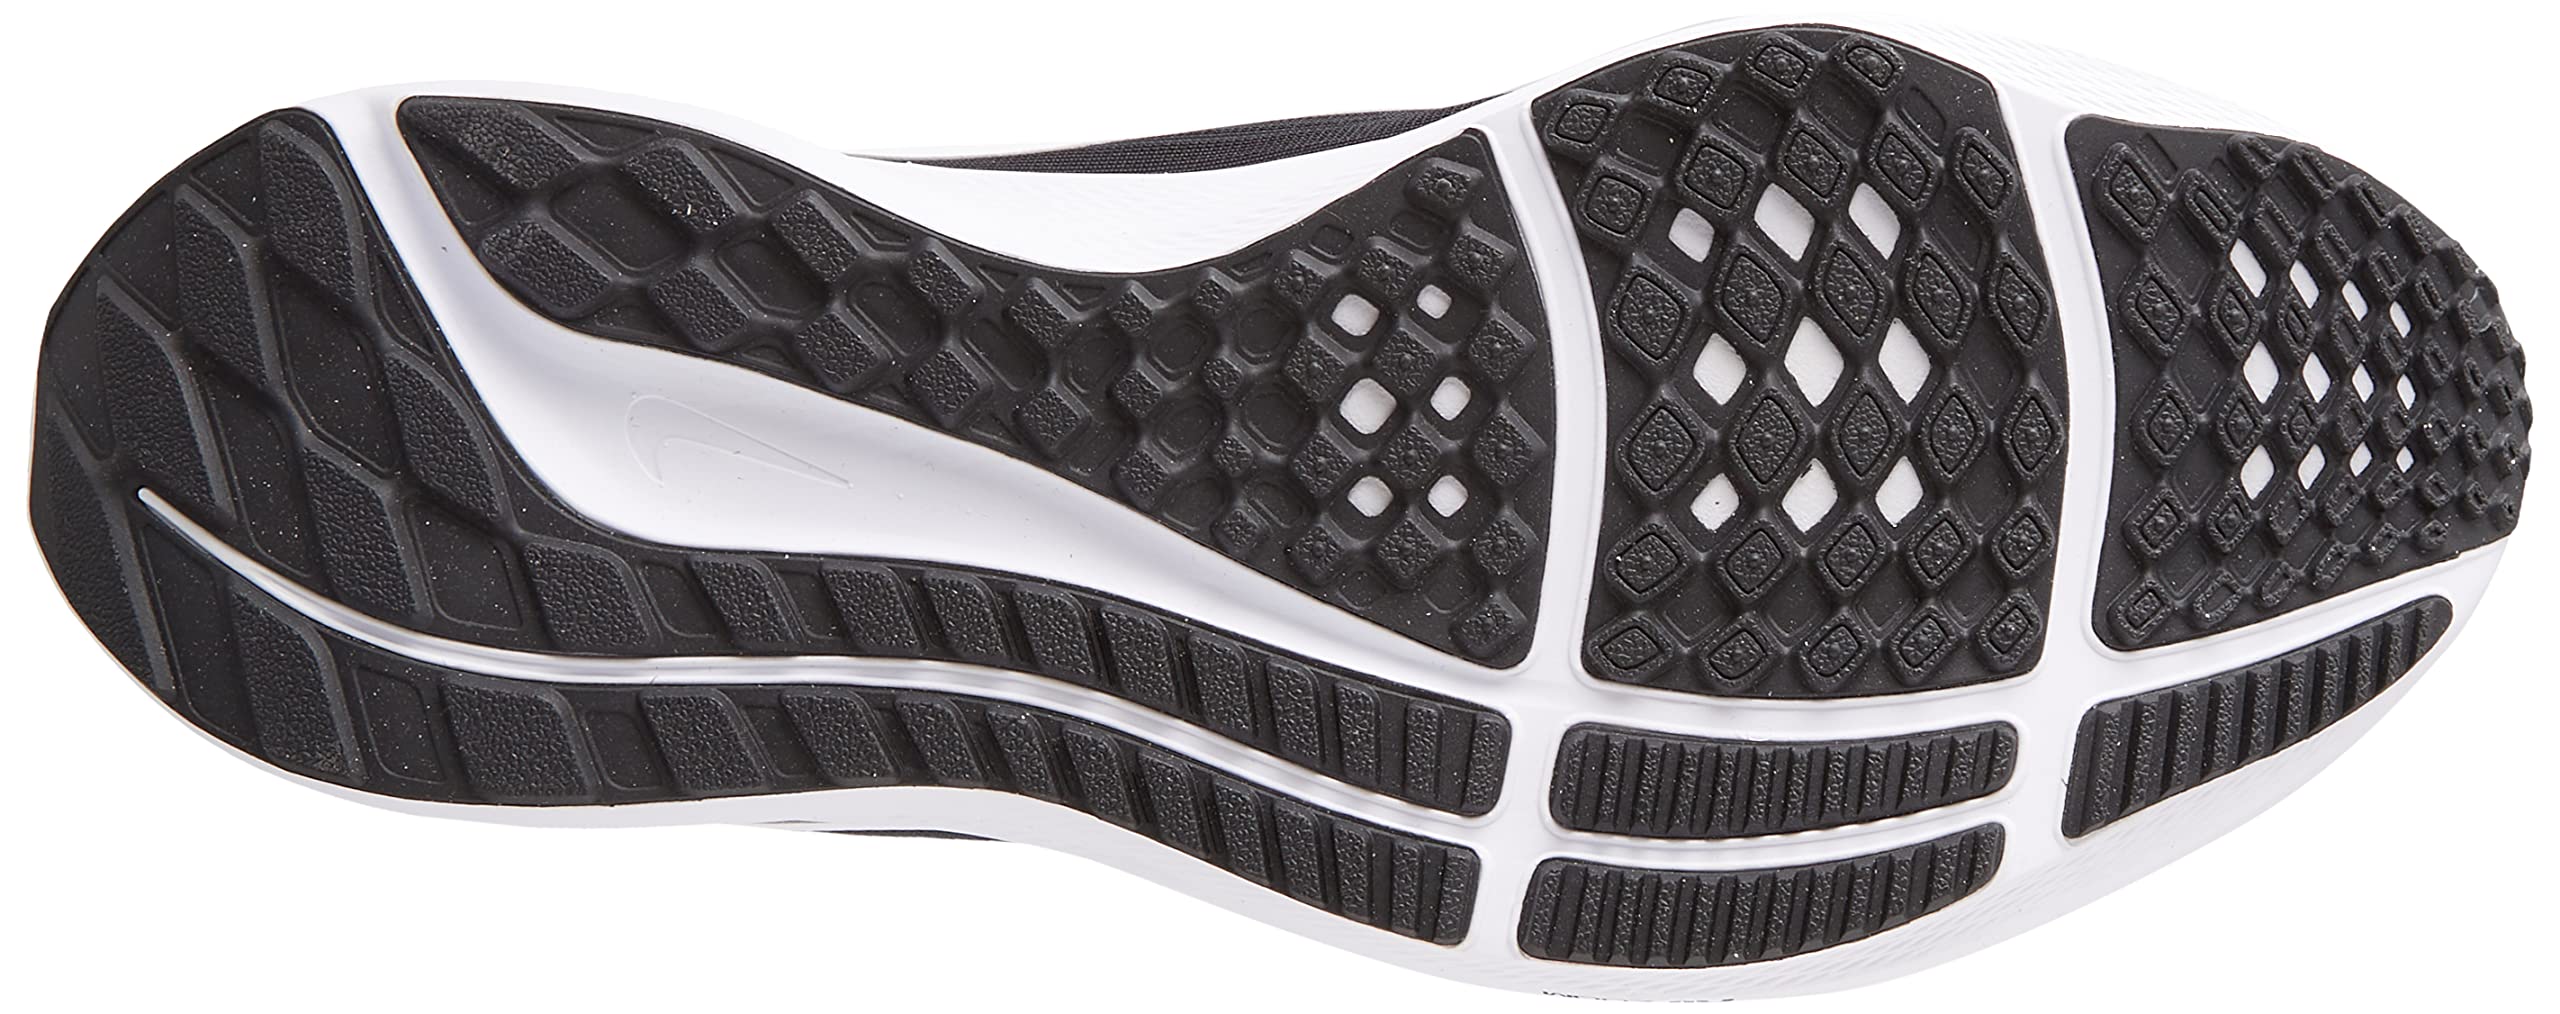 Nike Men's Sport Trail Running Shoe